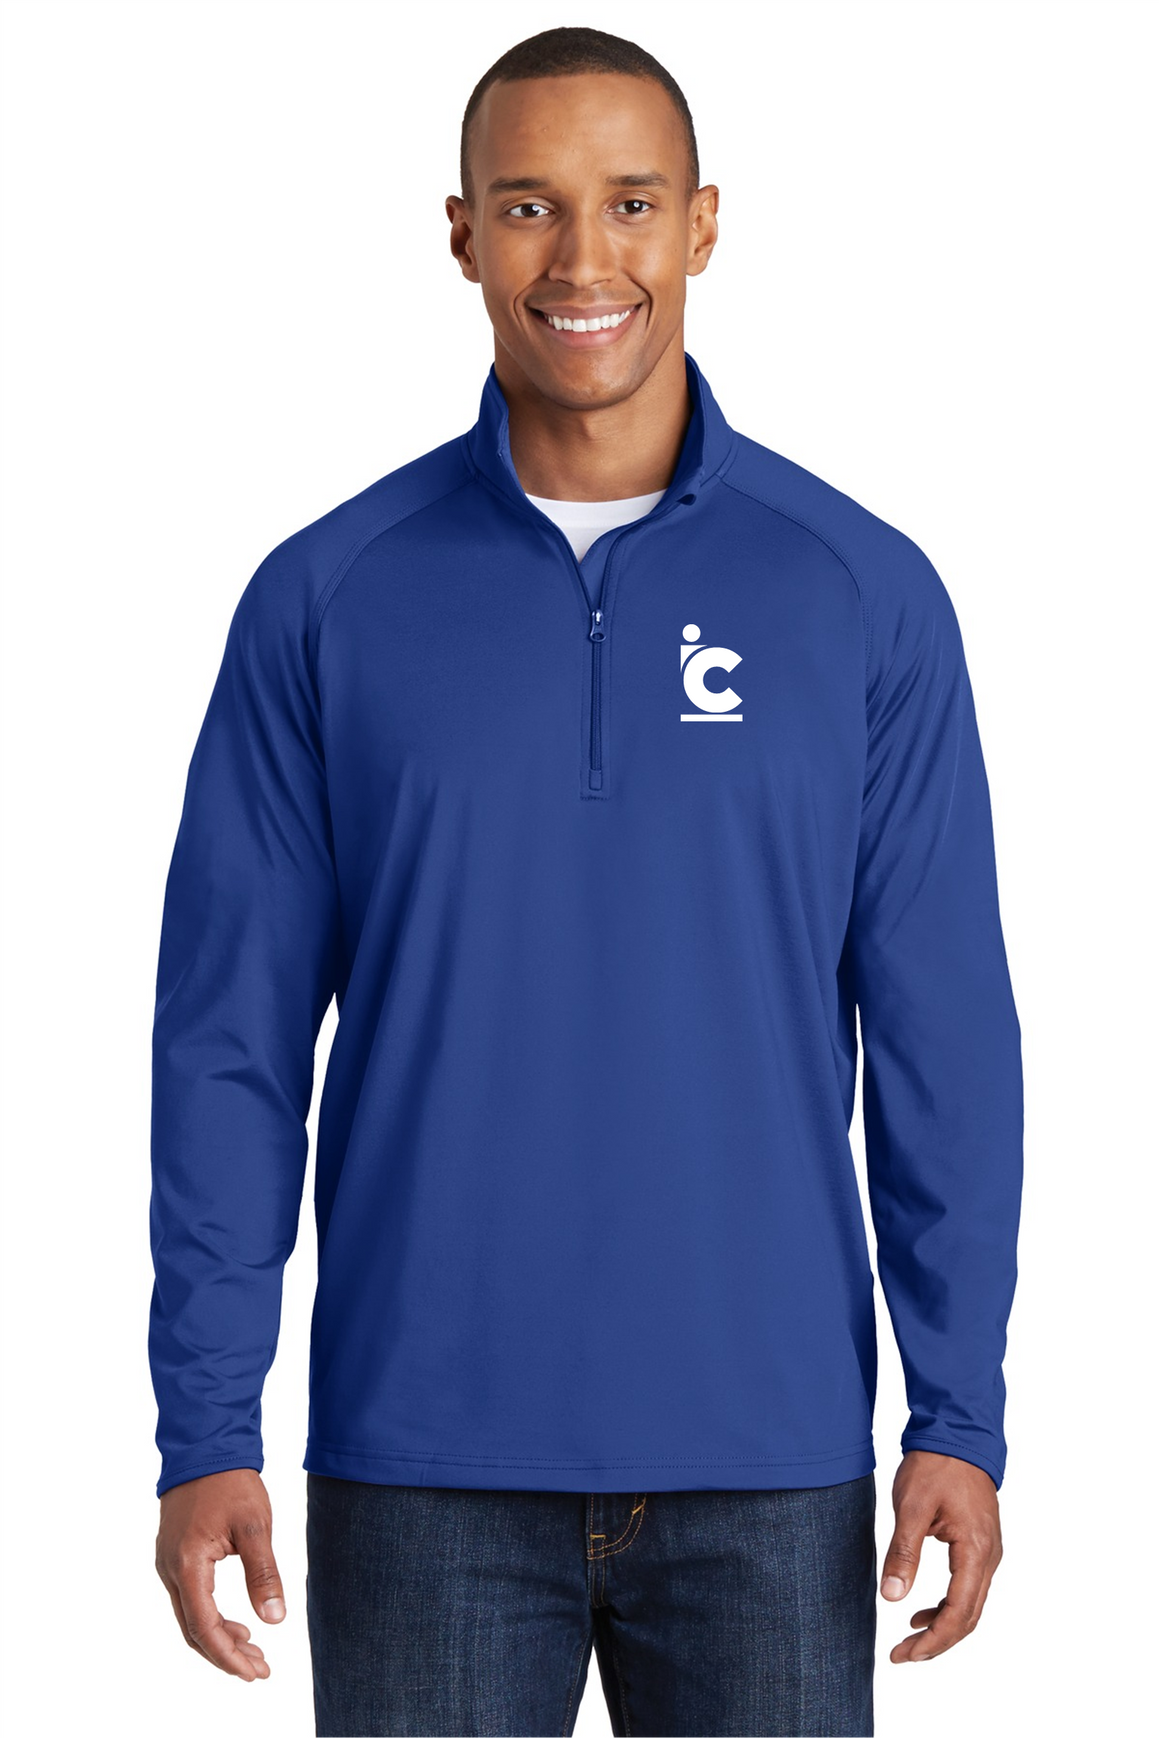 Men's IC Tennis Quarter Zip Pullover Sports Jacket